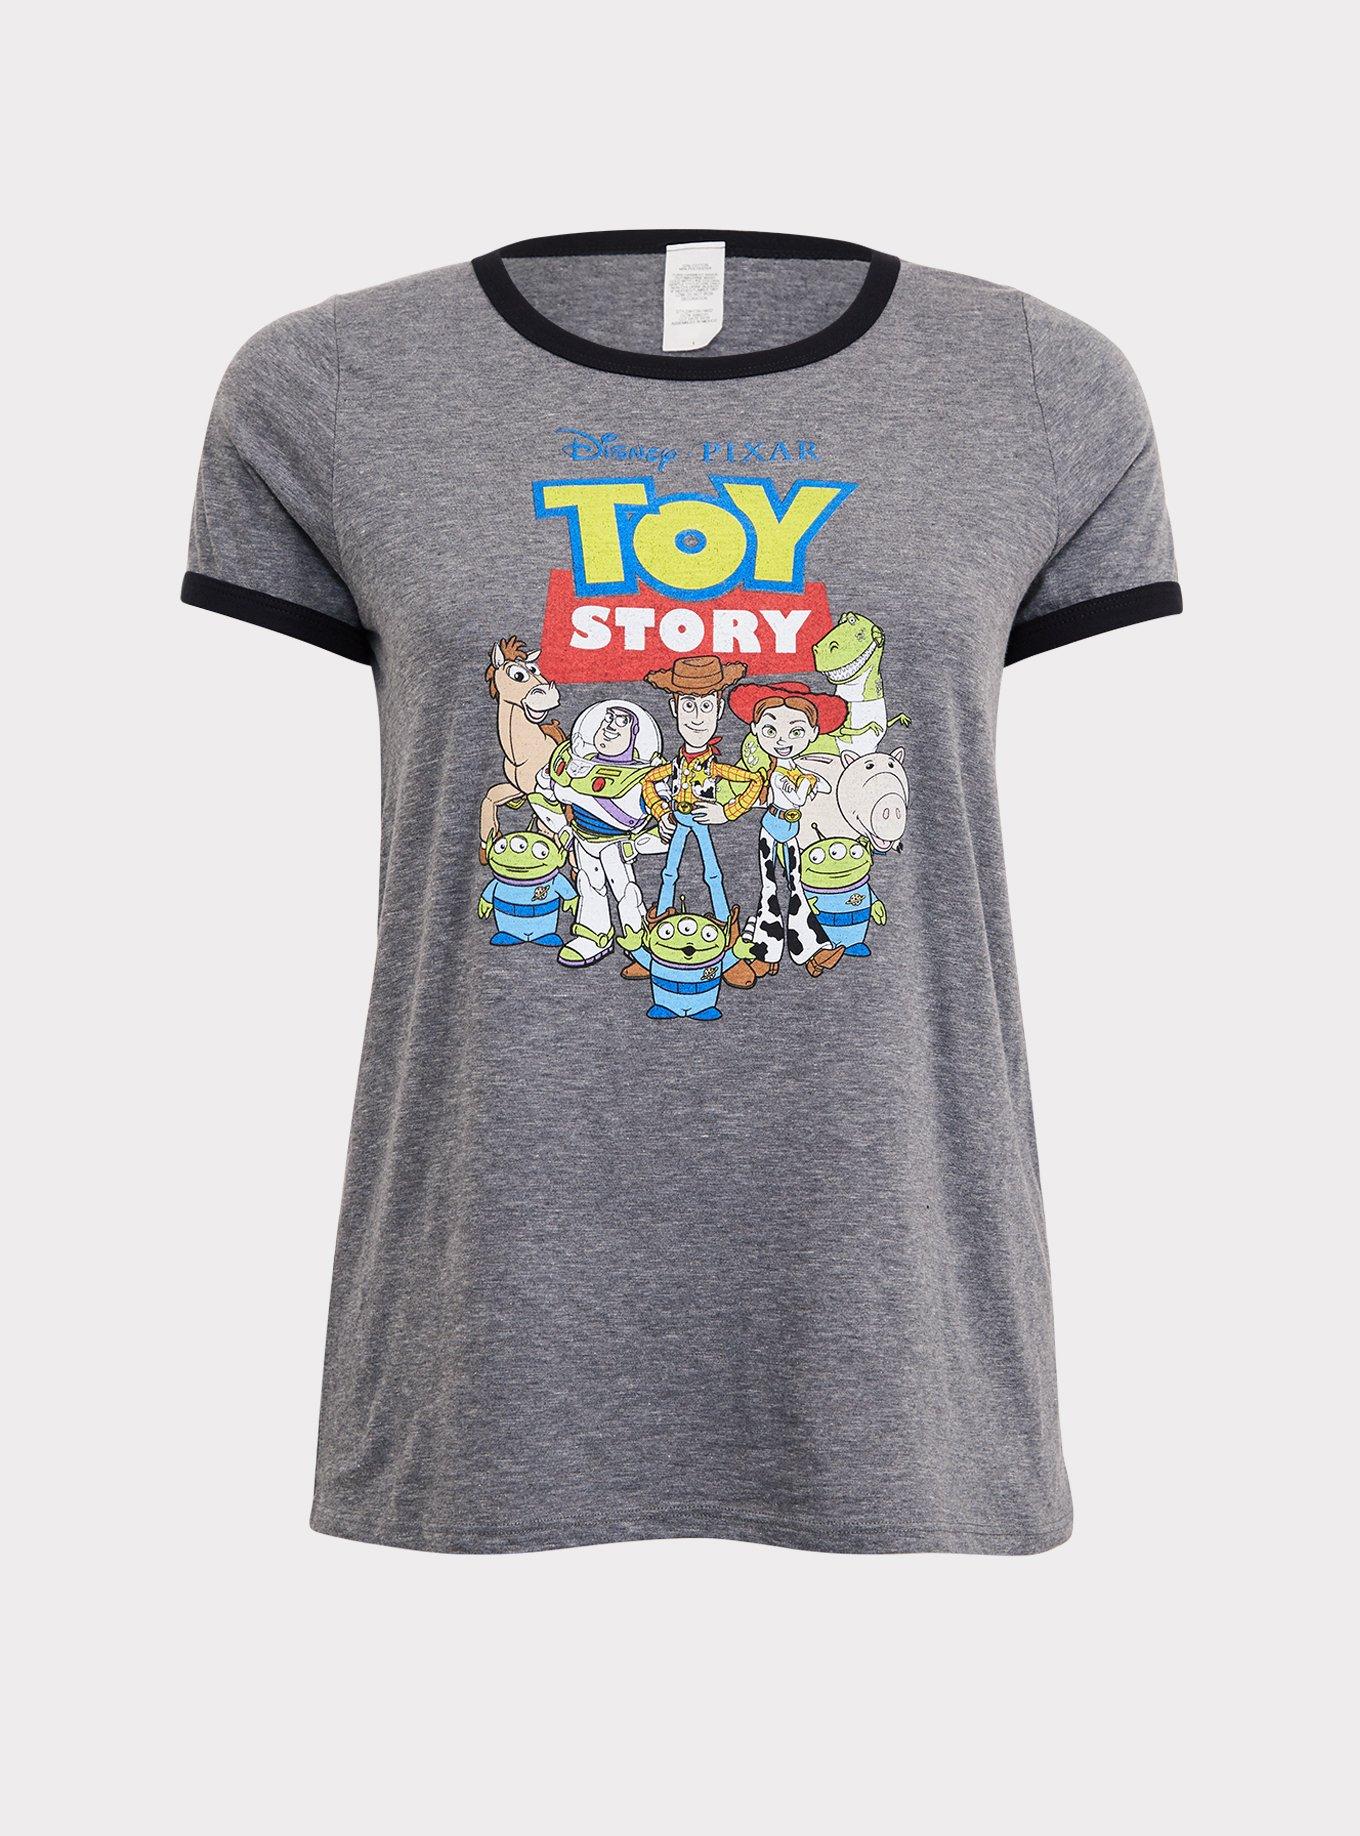 Plus Size - Disney Pixar Toy Story Grey Classic Fit Ringer Tee - Torrid